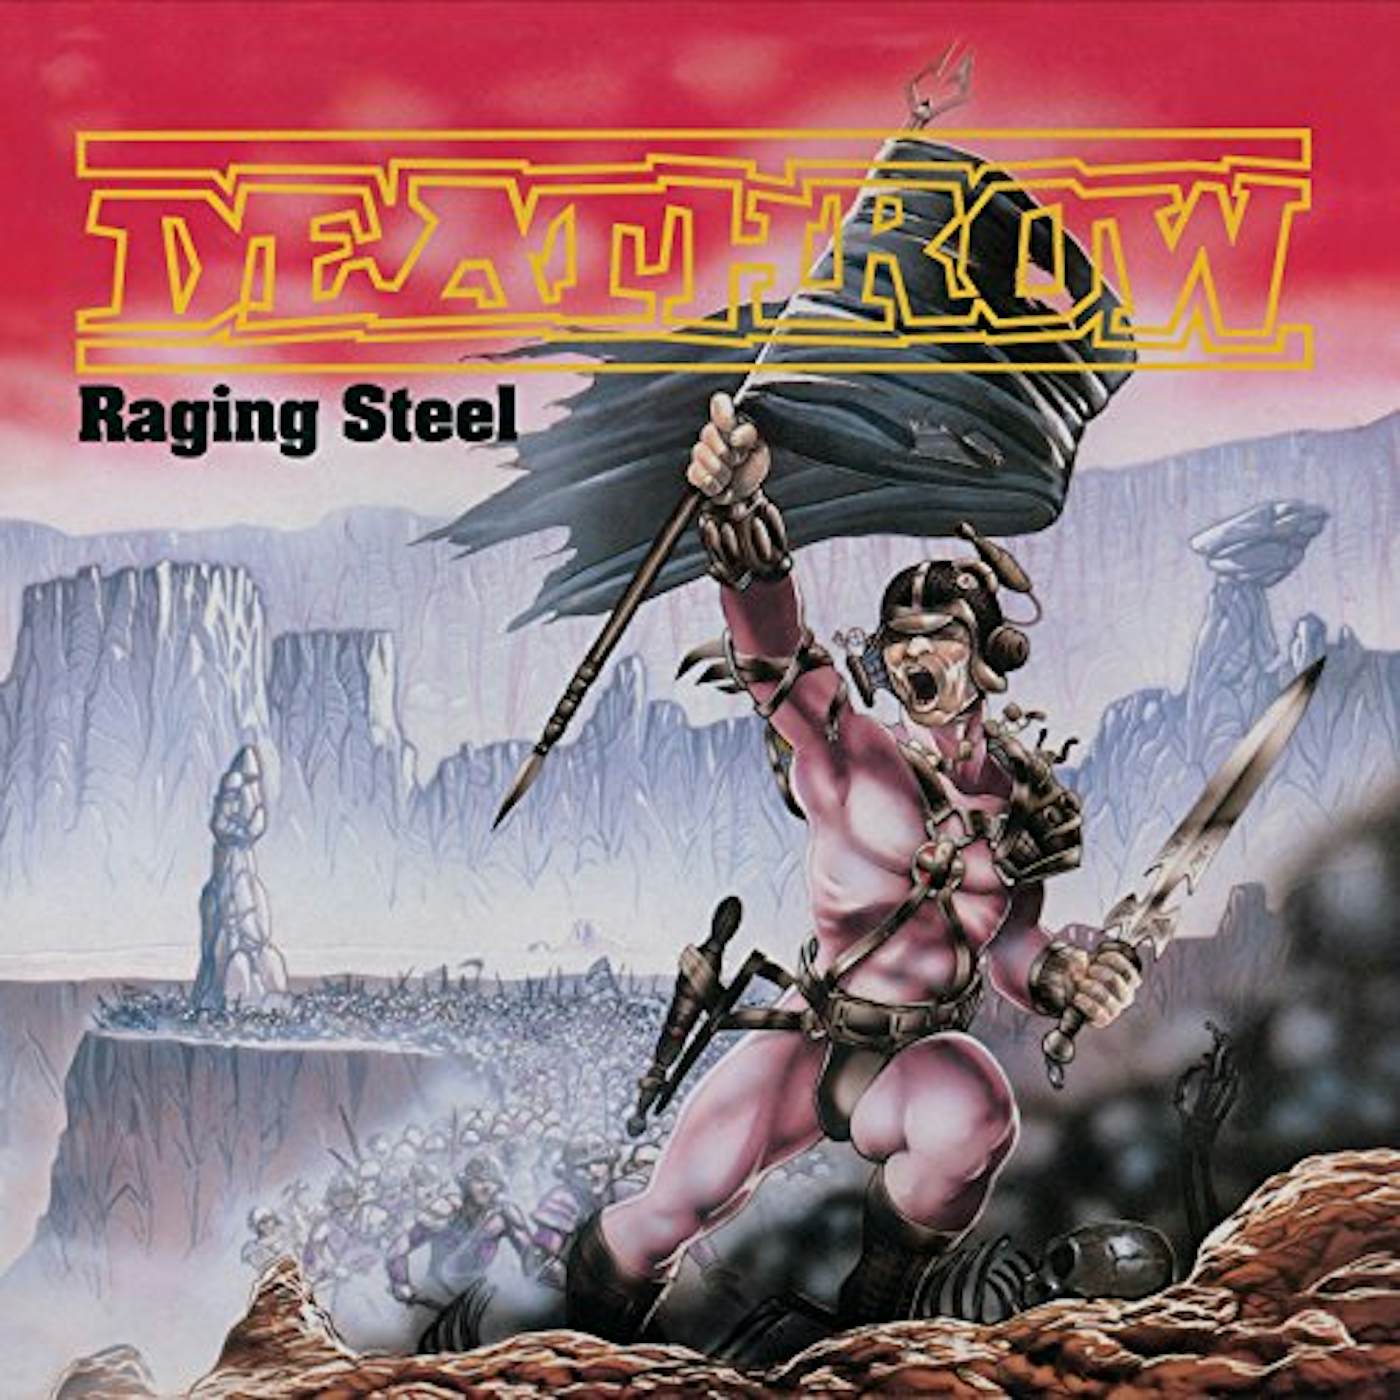 Deathrow Raging Steel Vinyl Record